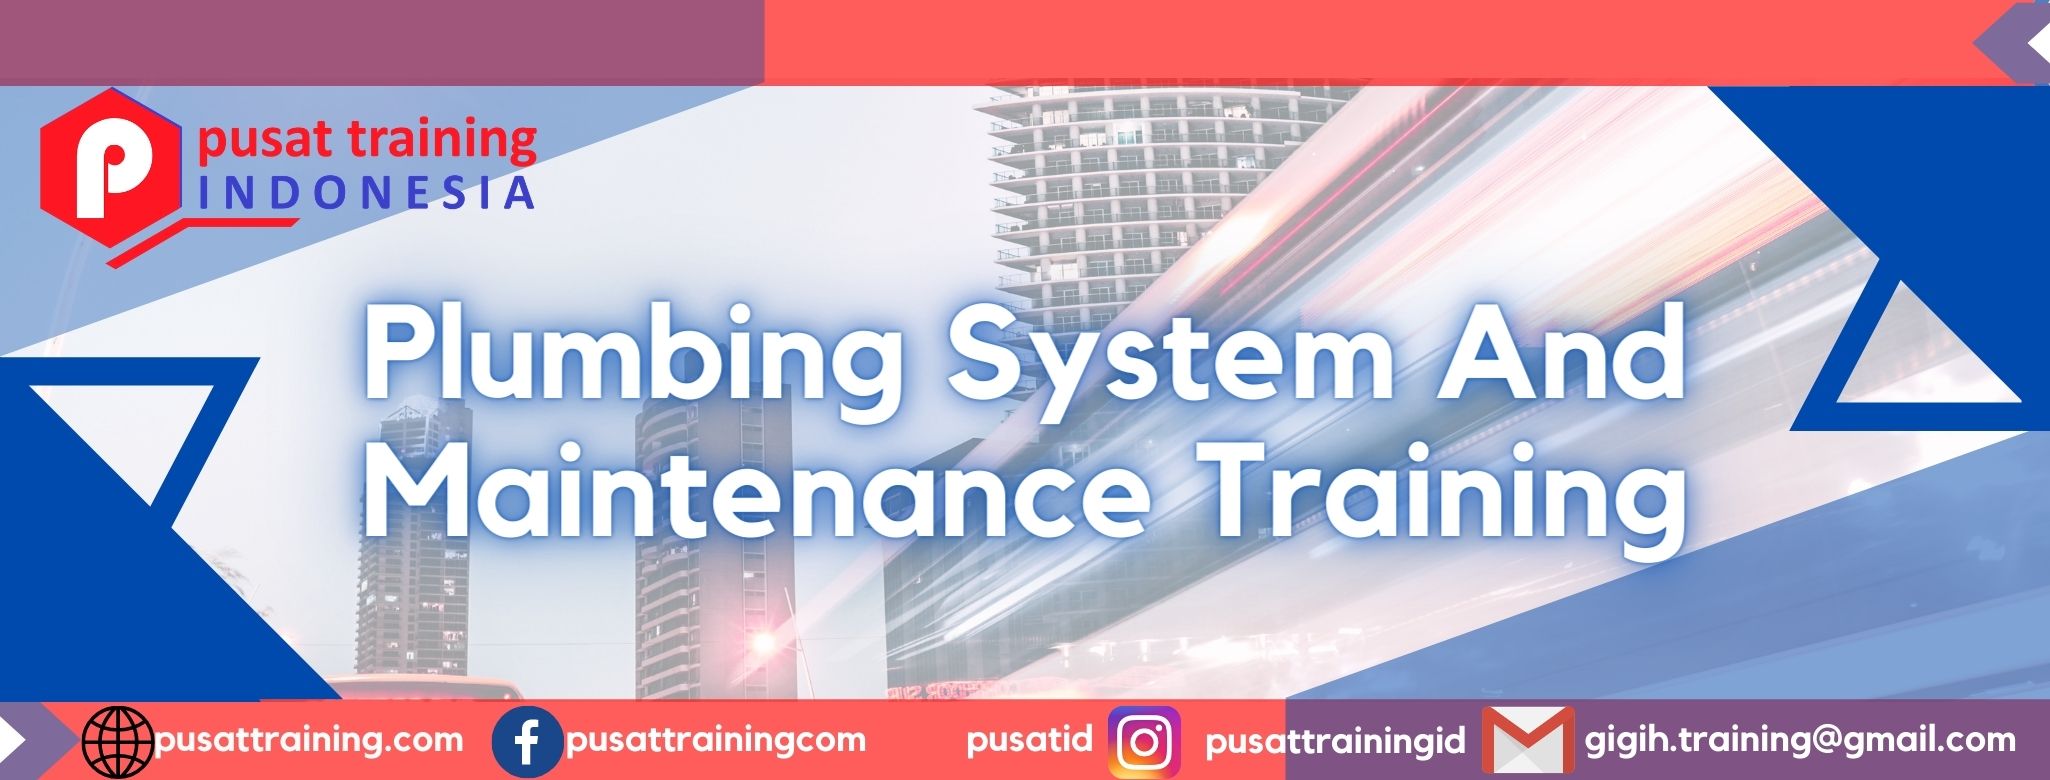 Plumbing-System-And-Maintenance-Training